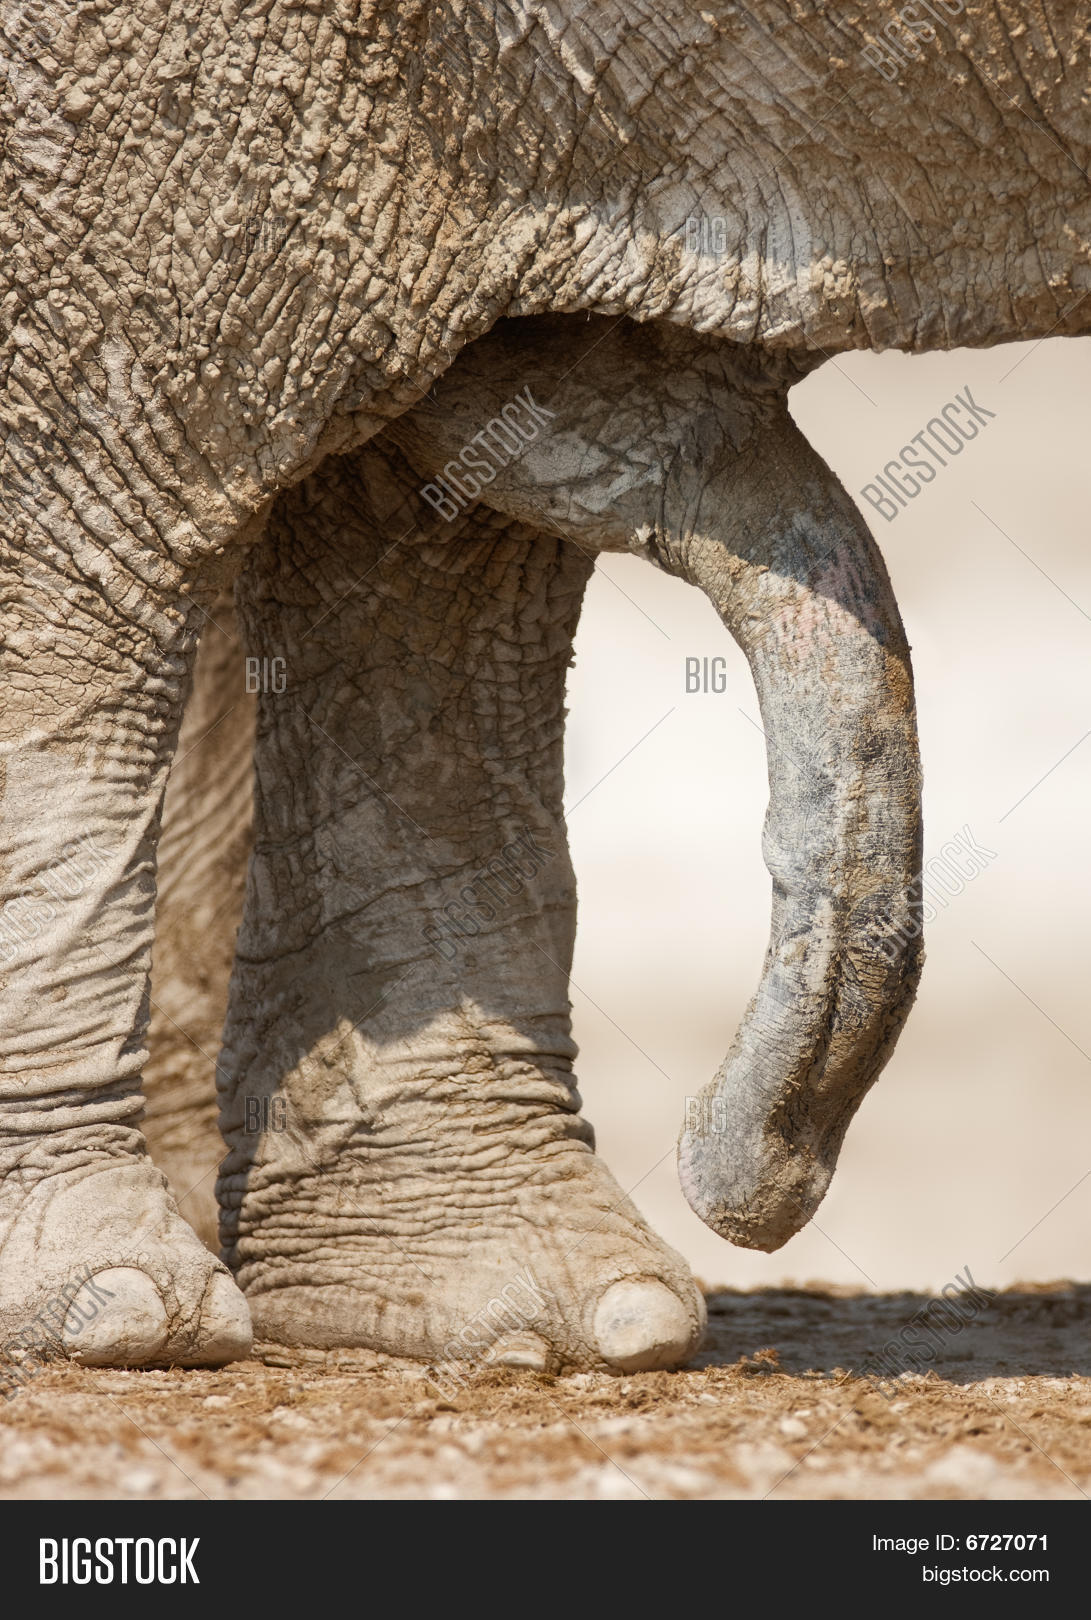 how big is an elephant dick